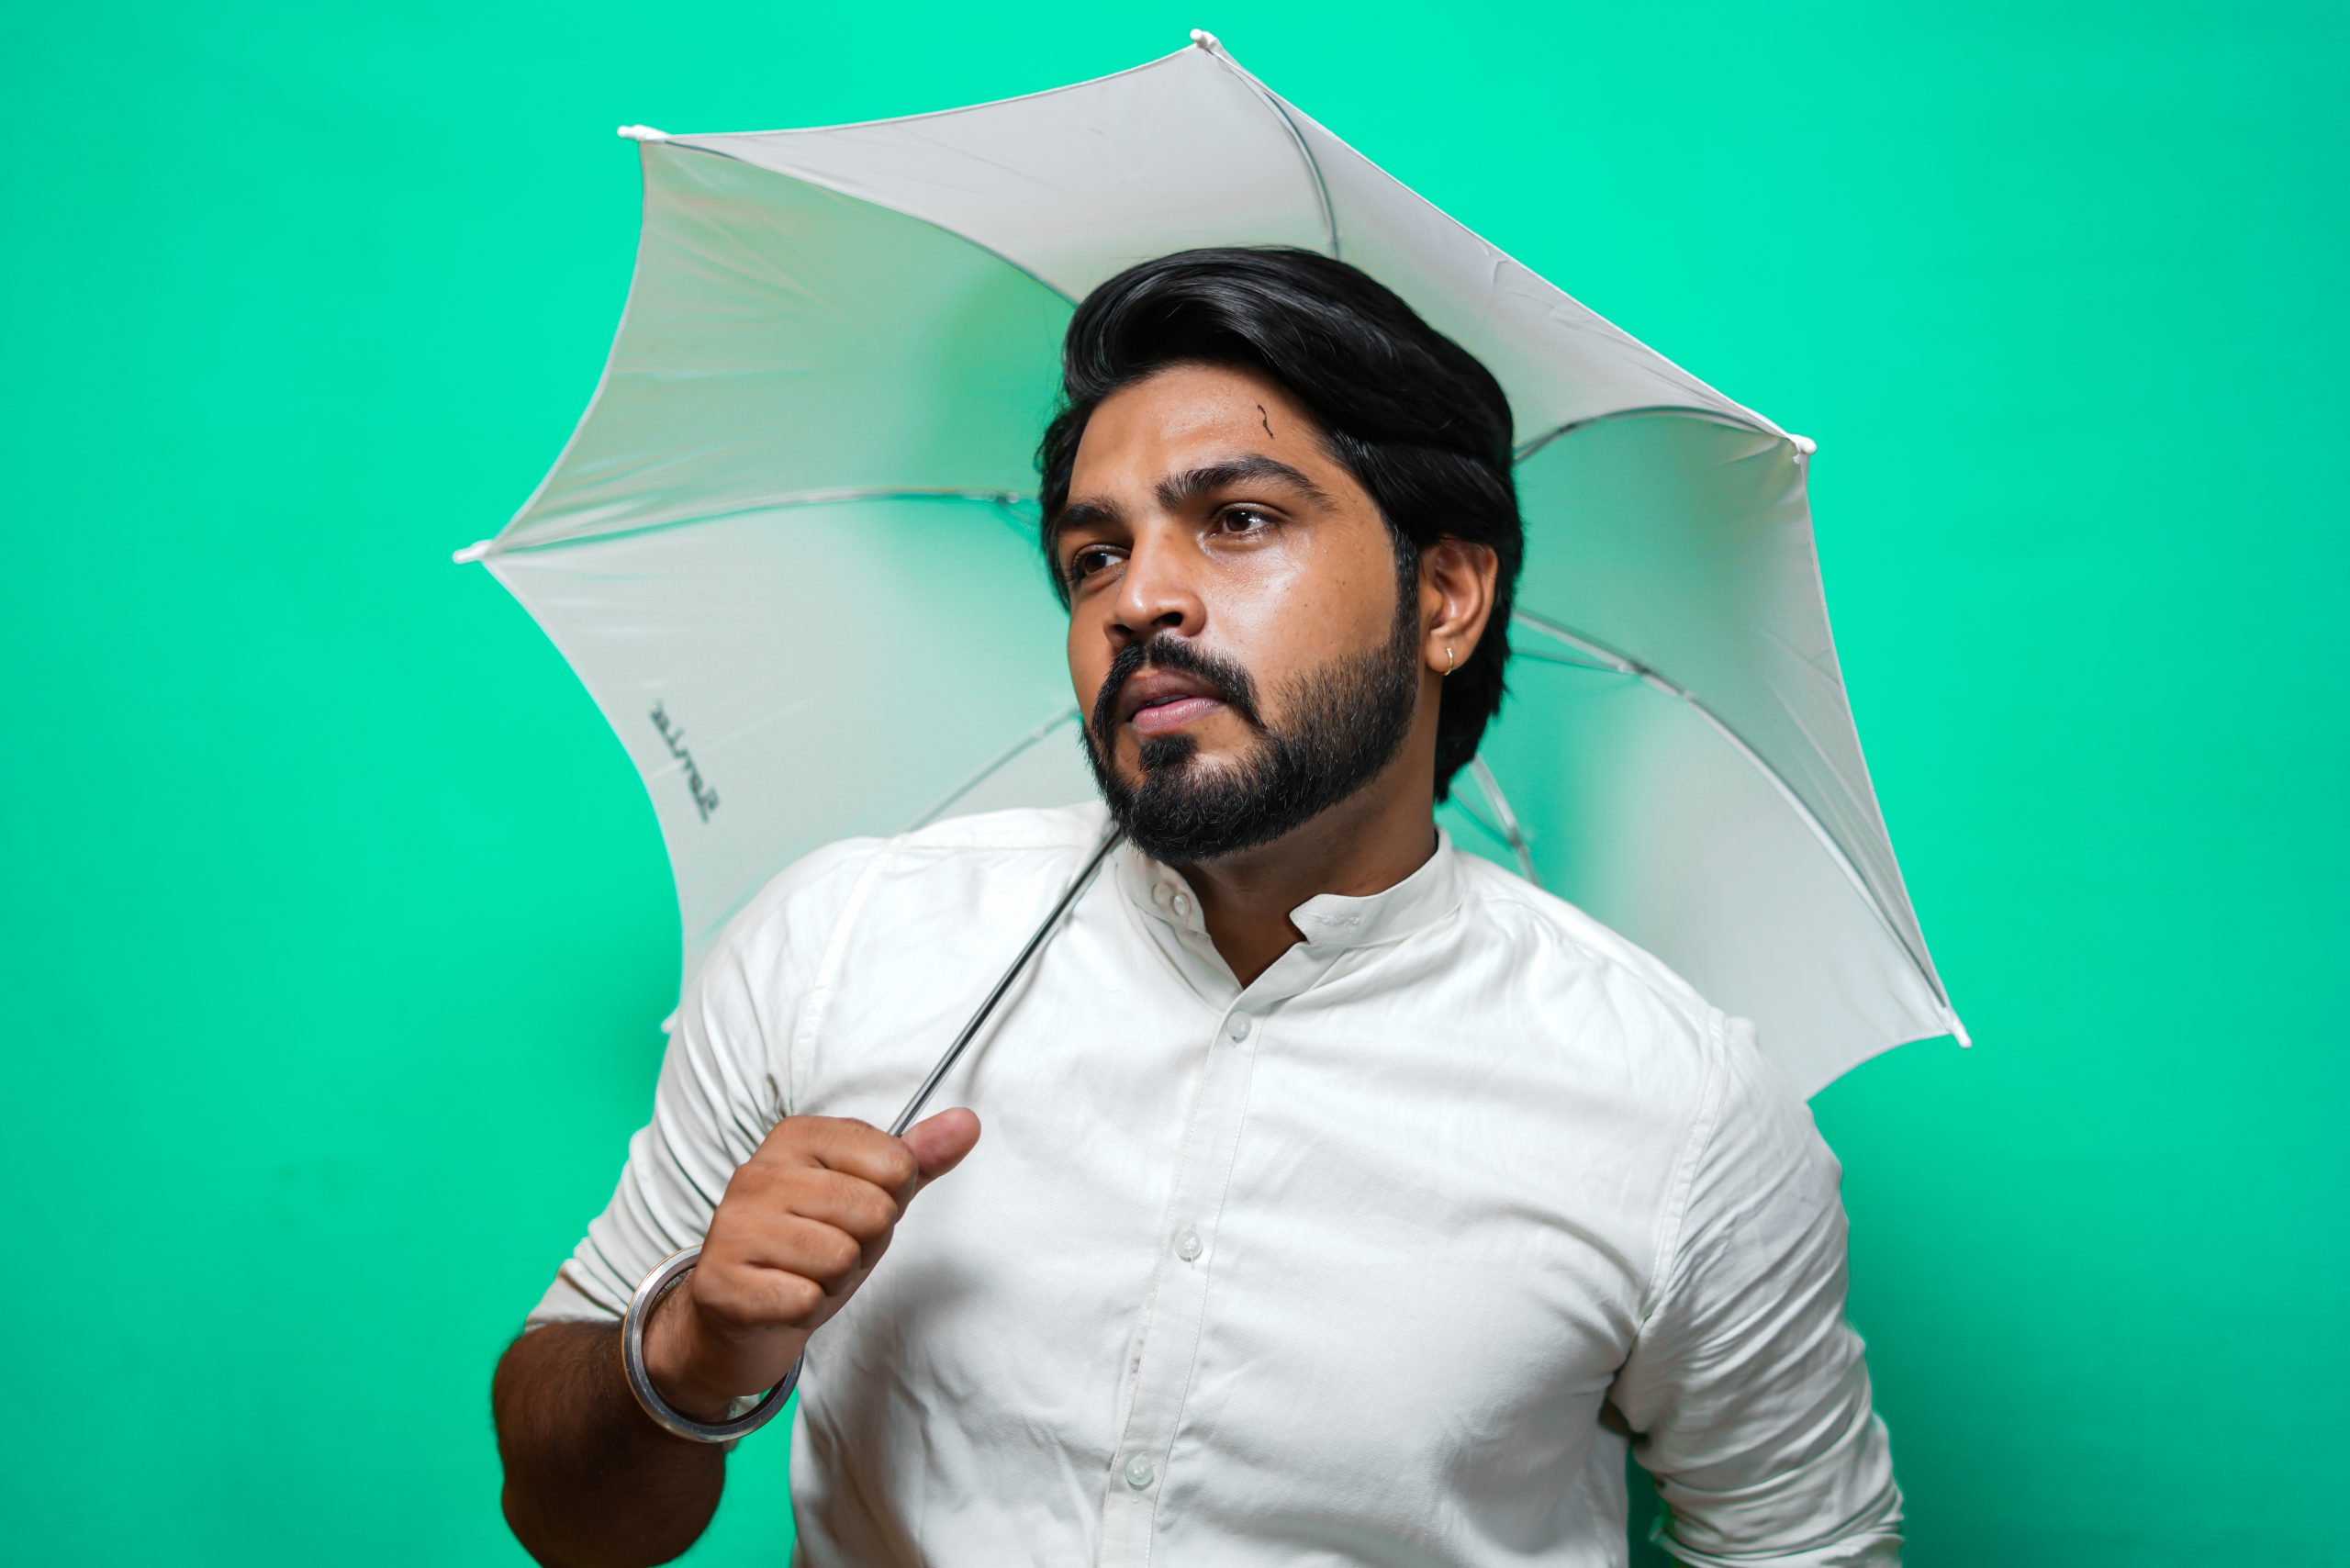 A serious man holding an umbrella